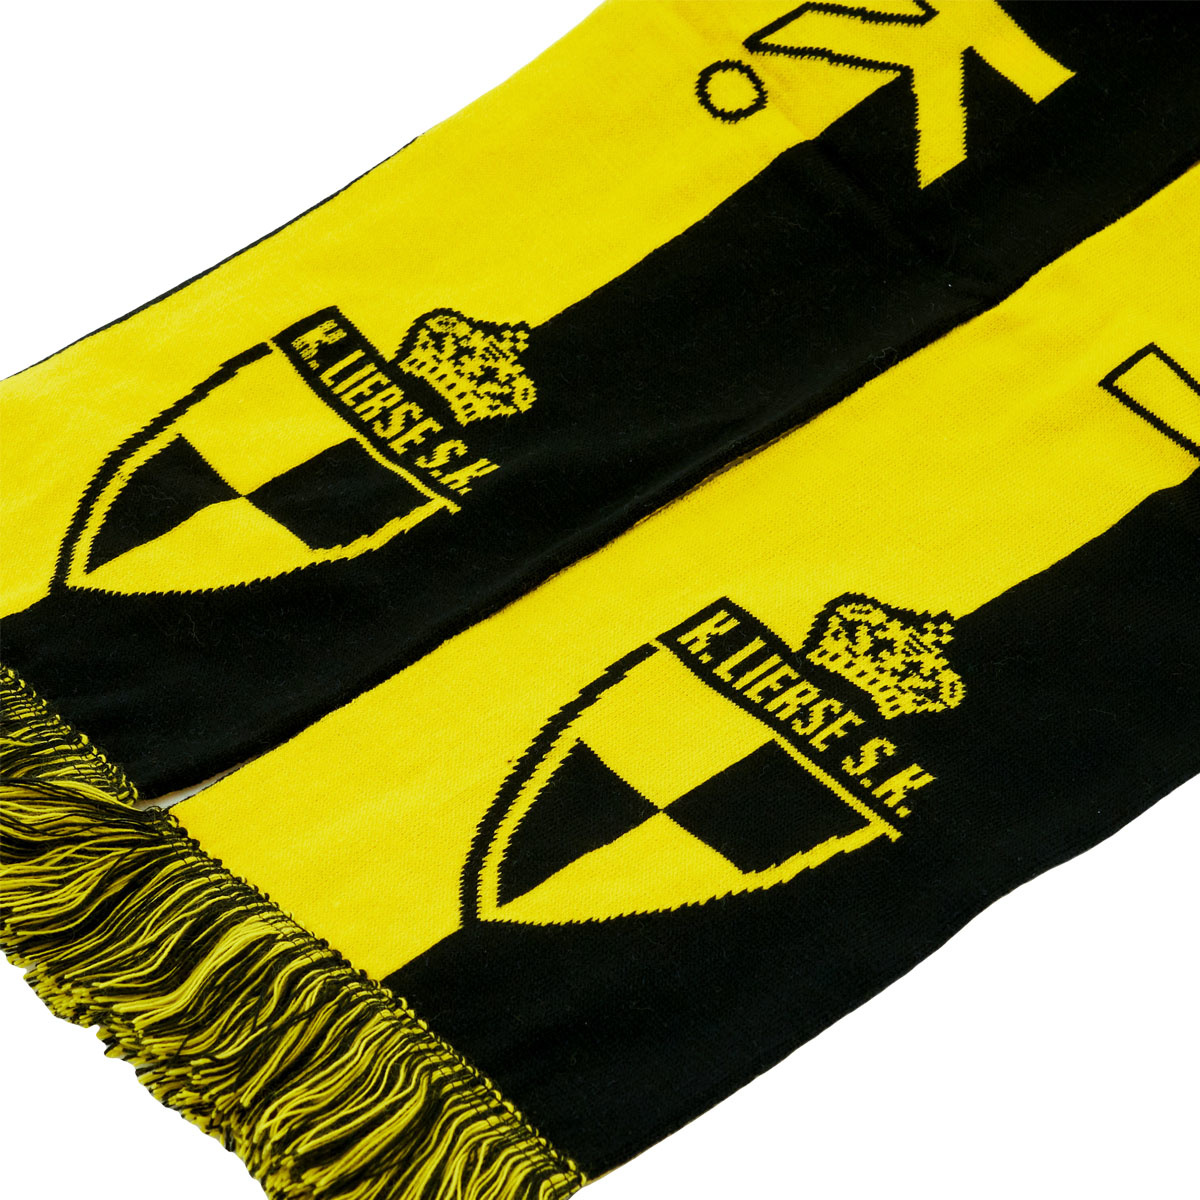 Topfanz Scarf yellow black Lierse SK